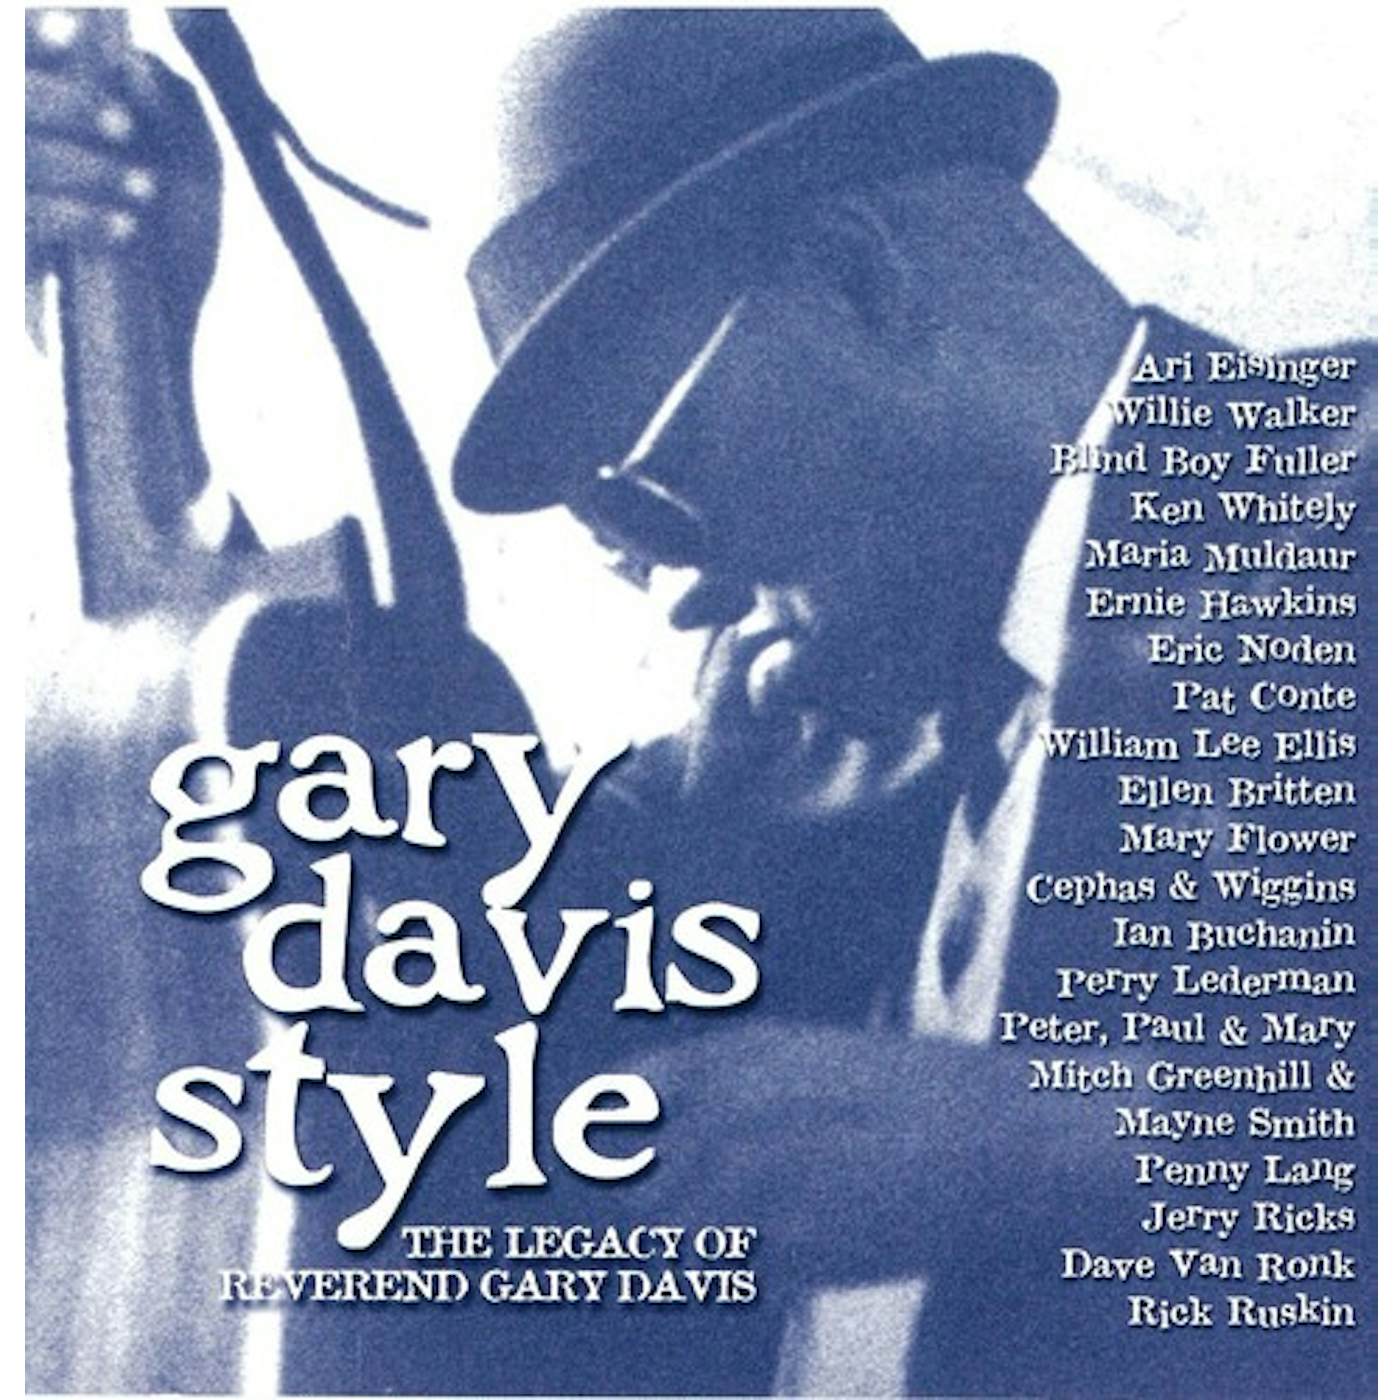 GARY DAVIS STYLE: THE LEGACY OF CD